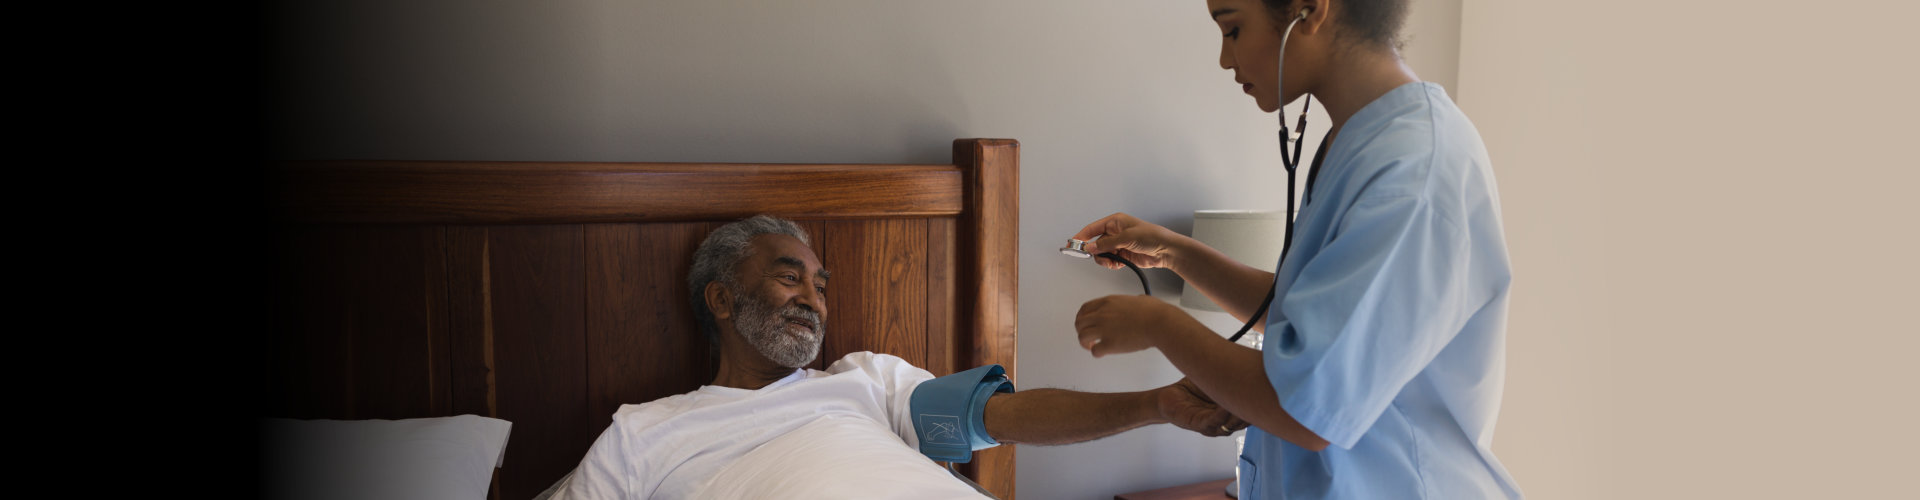 doctor measuring blood pressure of senior man in bedroom at home